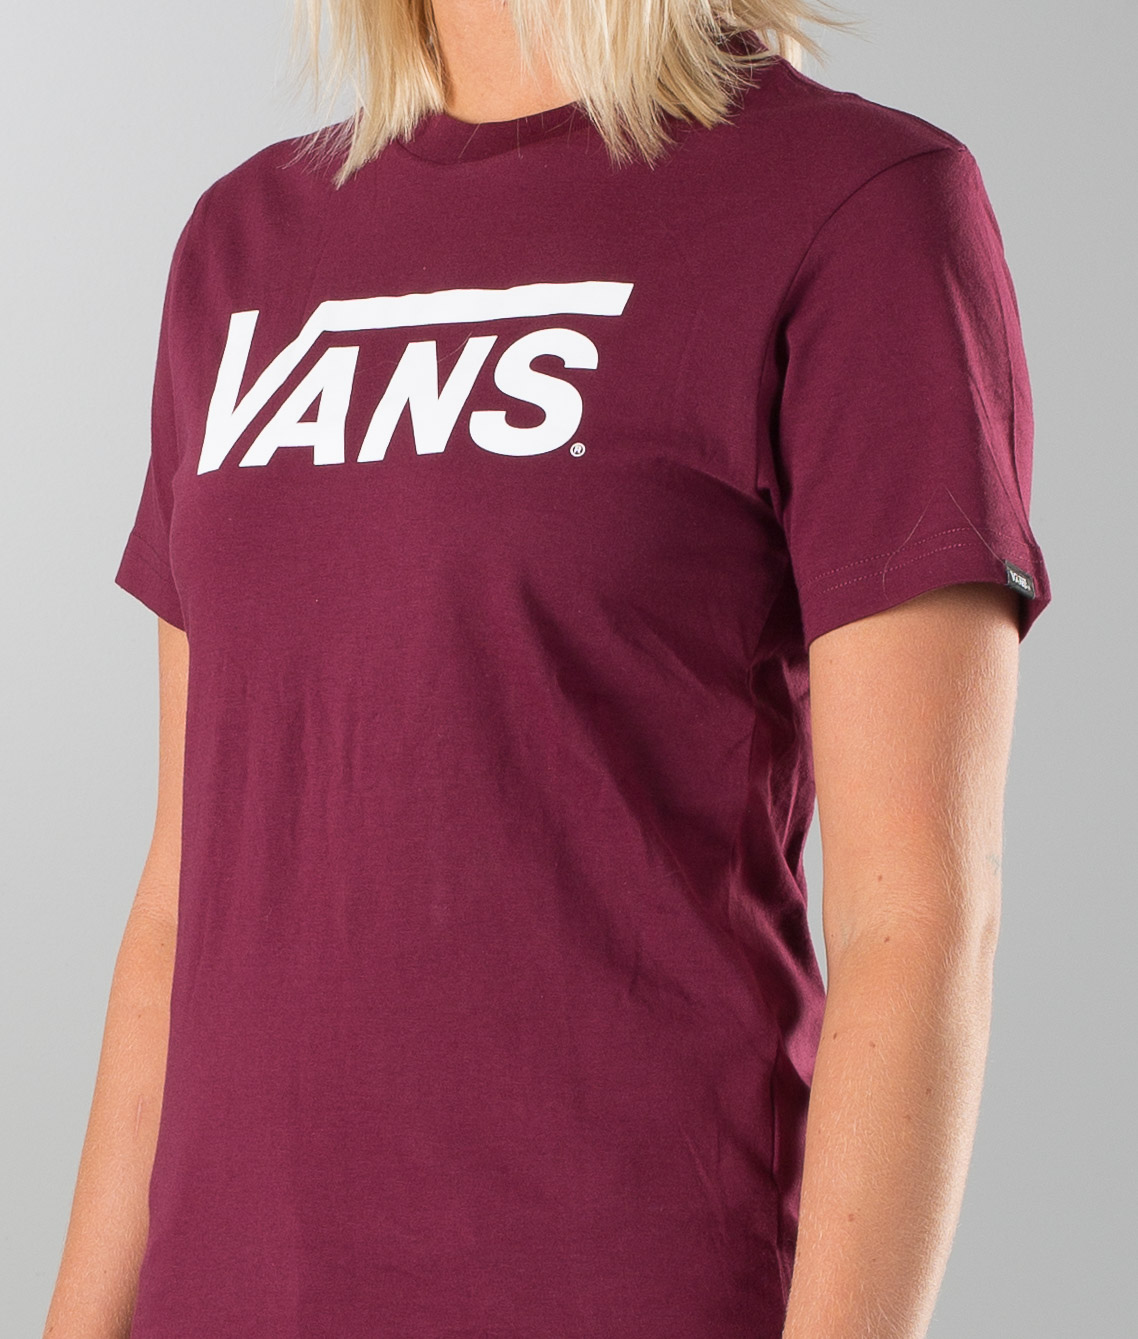 vans classic t shirt womens